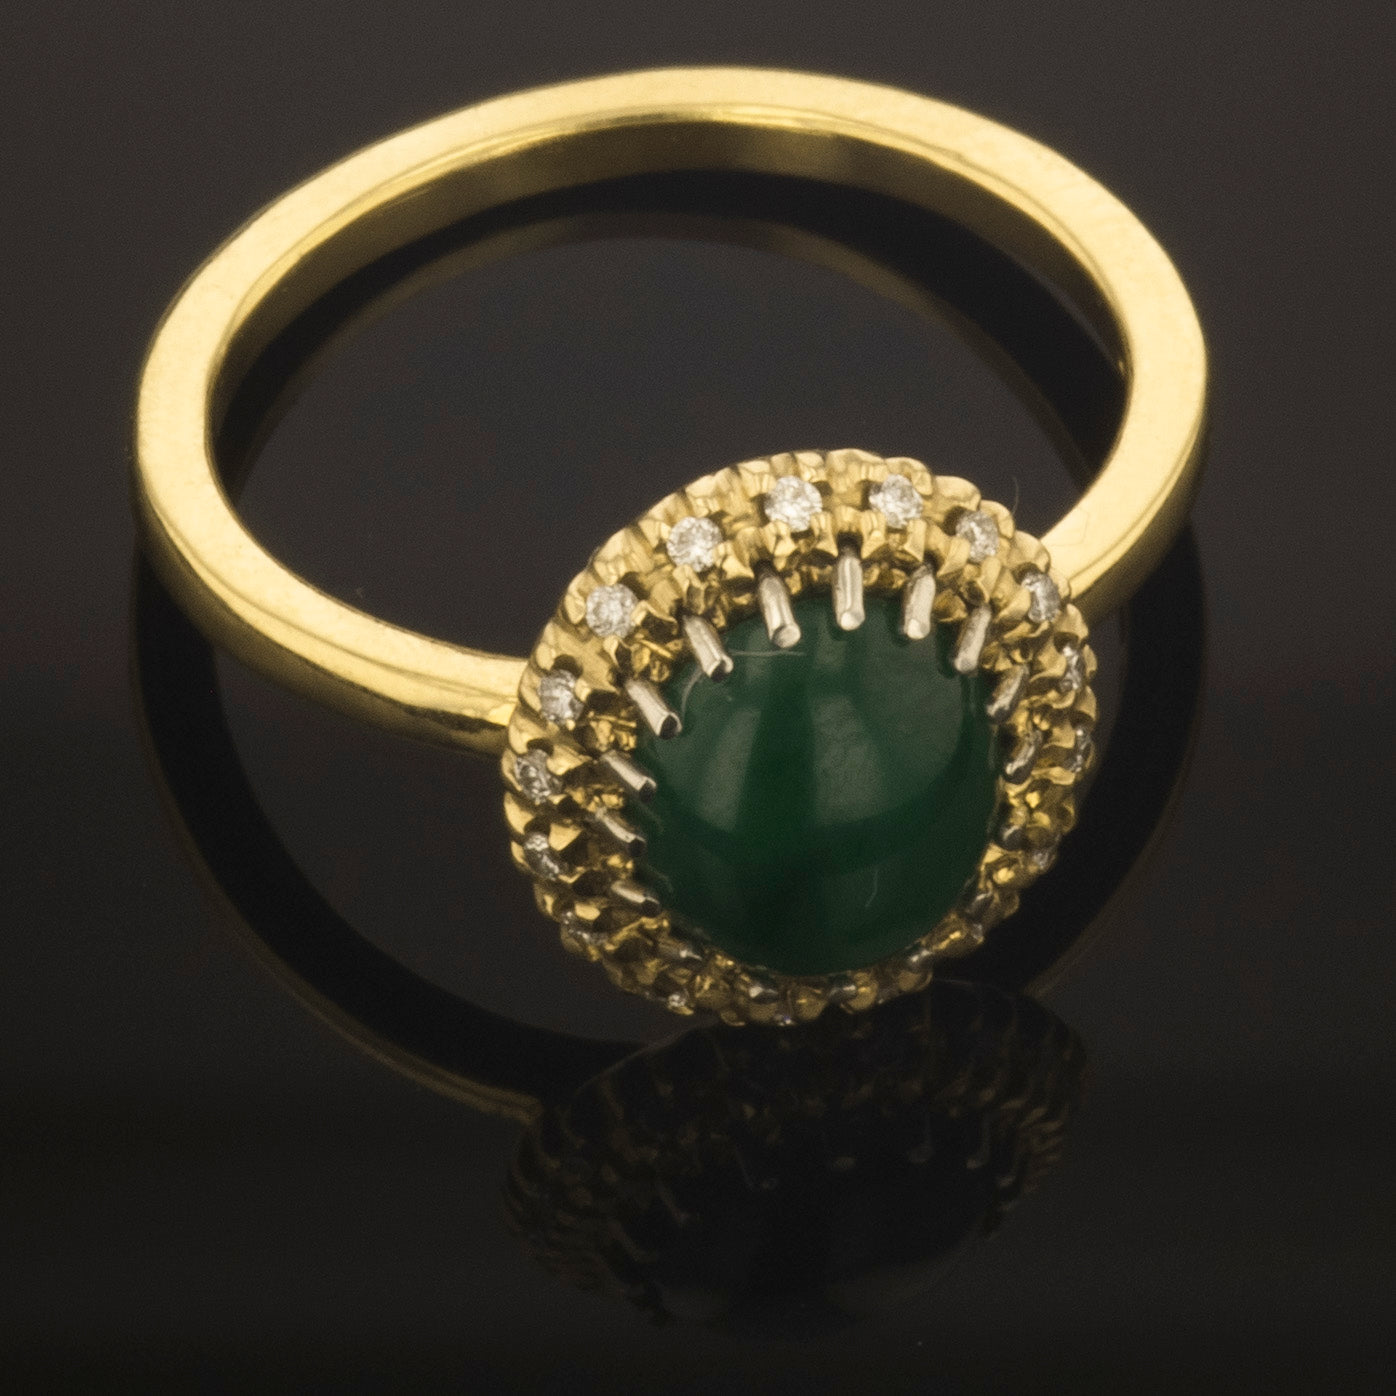 Green jade enagement ring